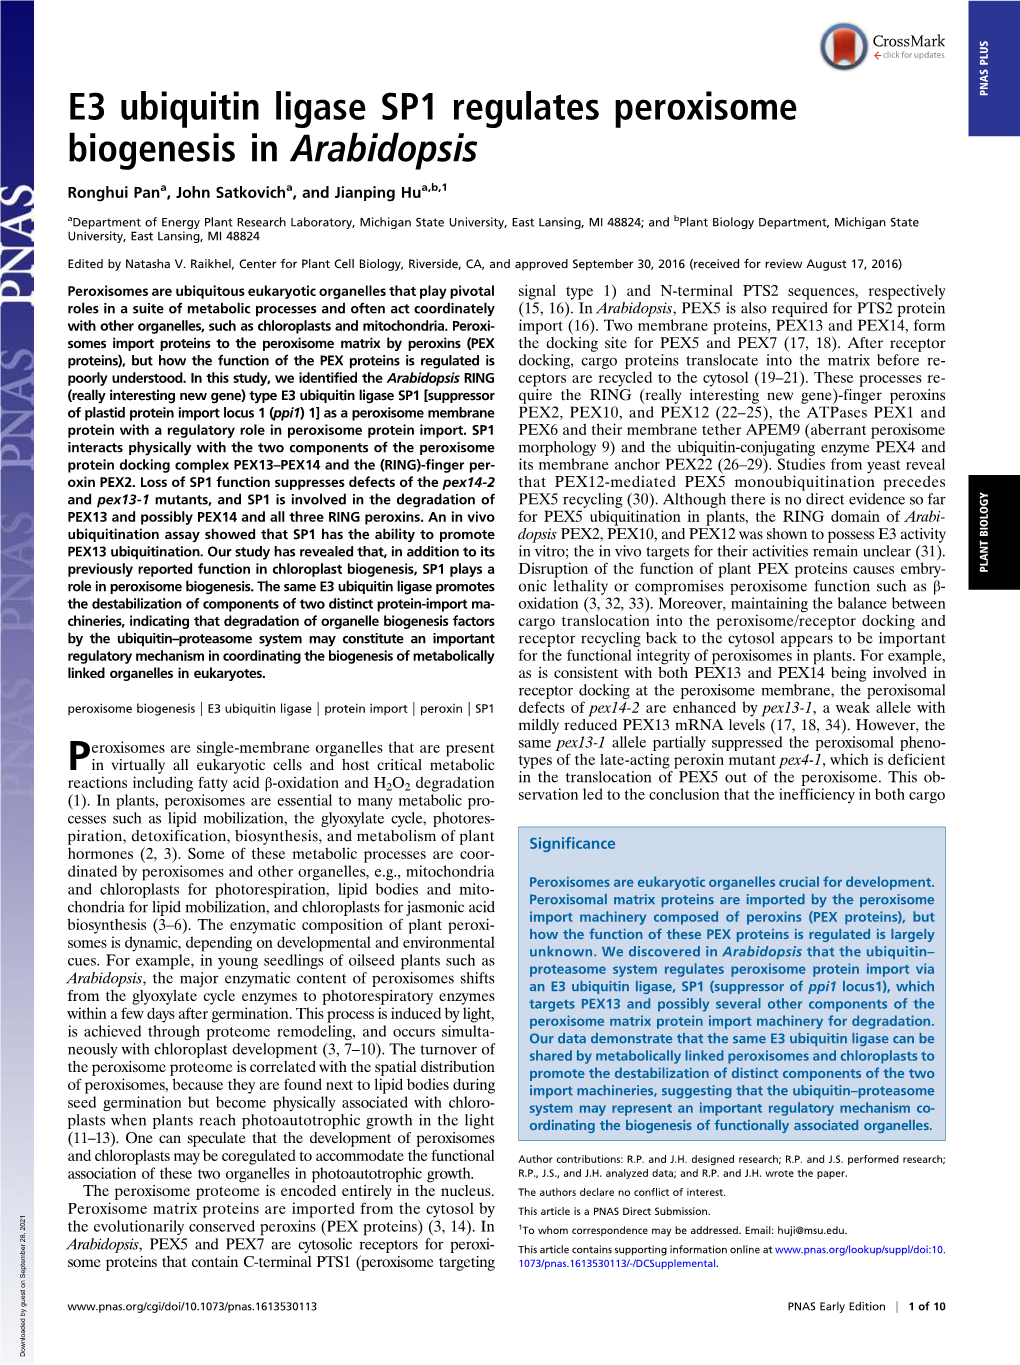 E3 Ubiquitin Ligase SP1 Regulates Peroxisome Biogenesis in Arabidopsis